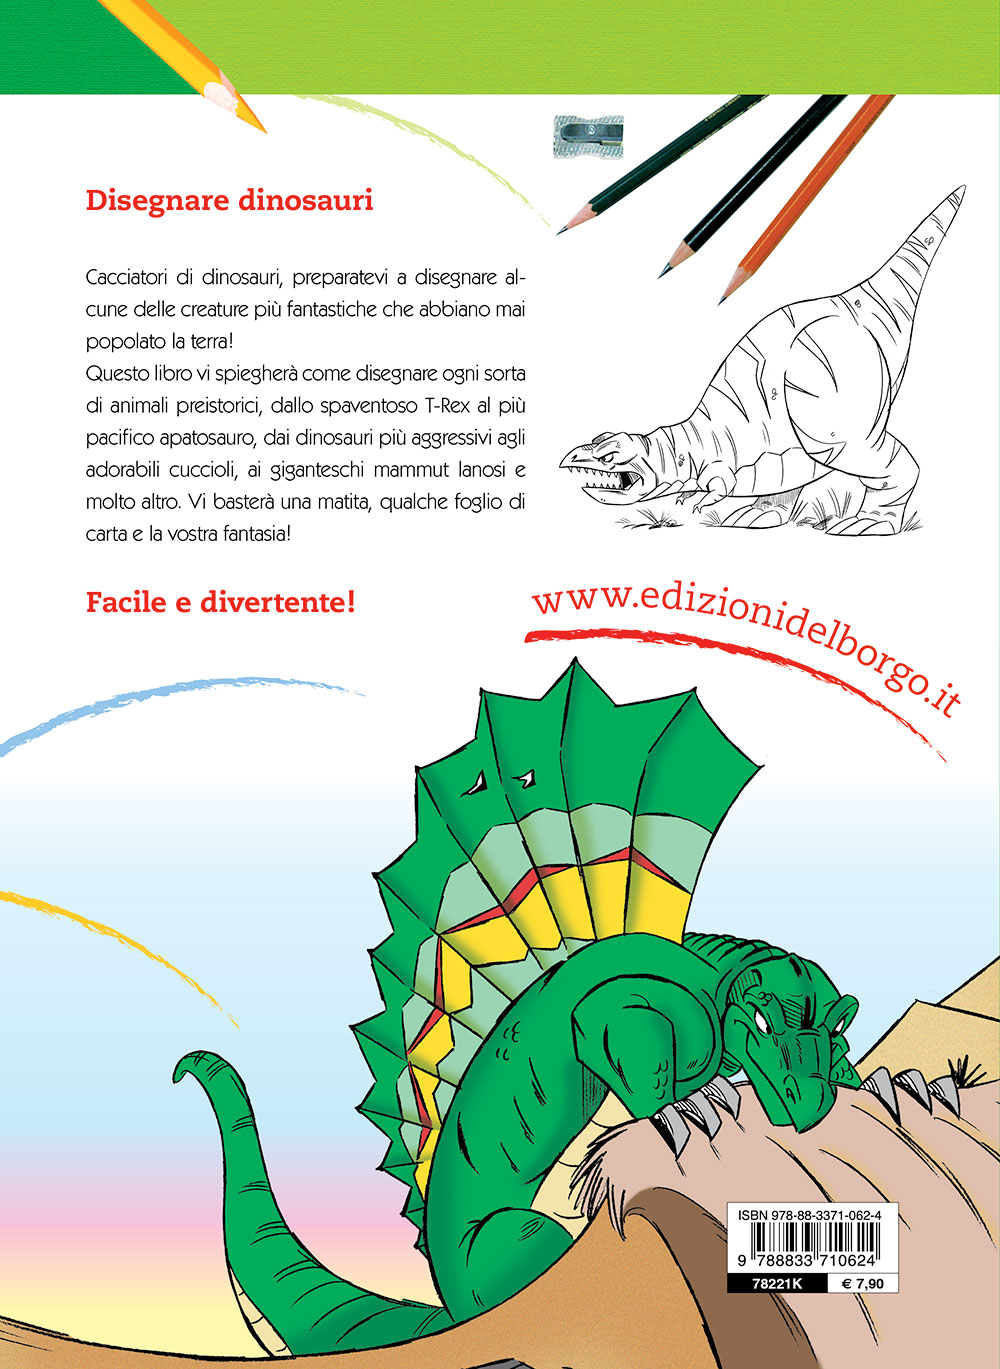 Disegnare dinosauri